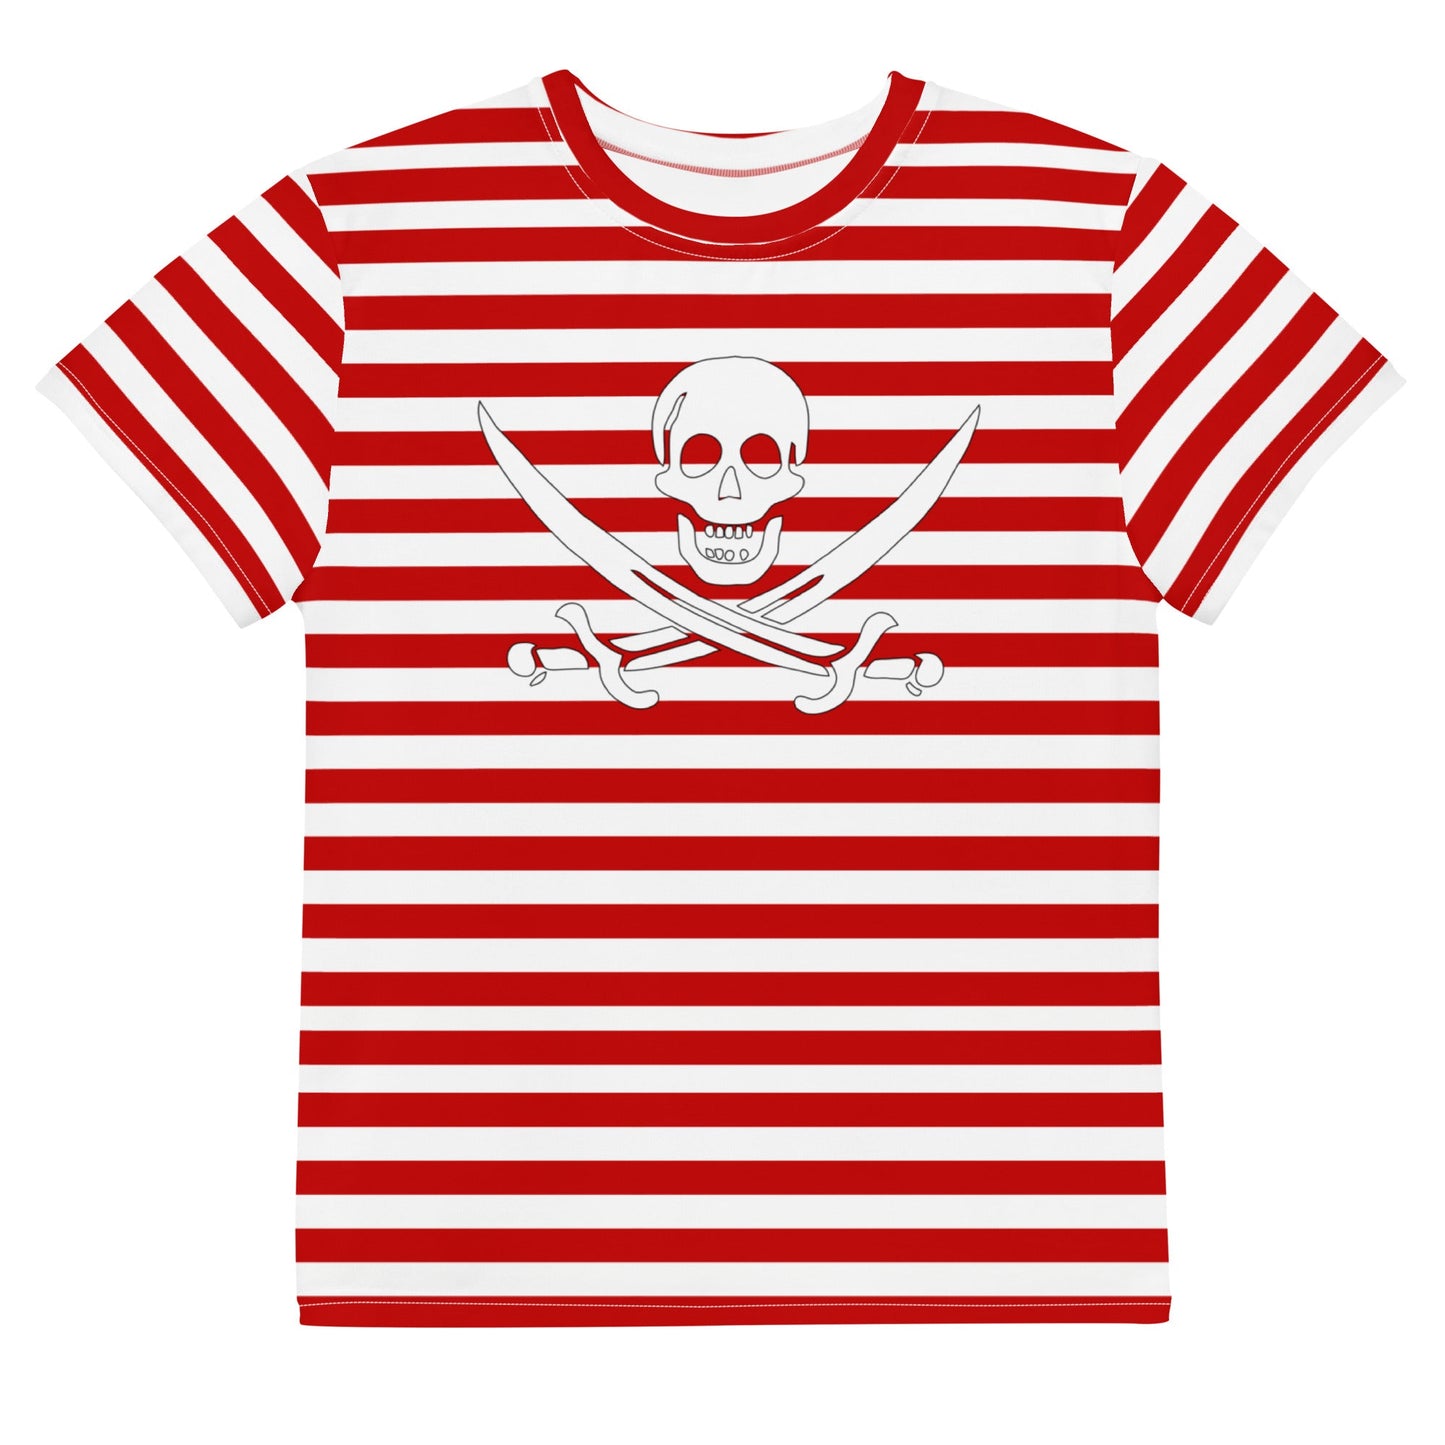 Pirate Night Youth crew neck t-shirt disney boundingdisney cosplaydisney costume#tag4##tag5##tag6#